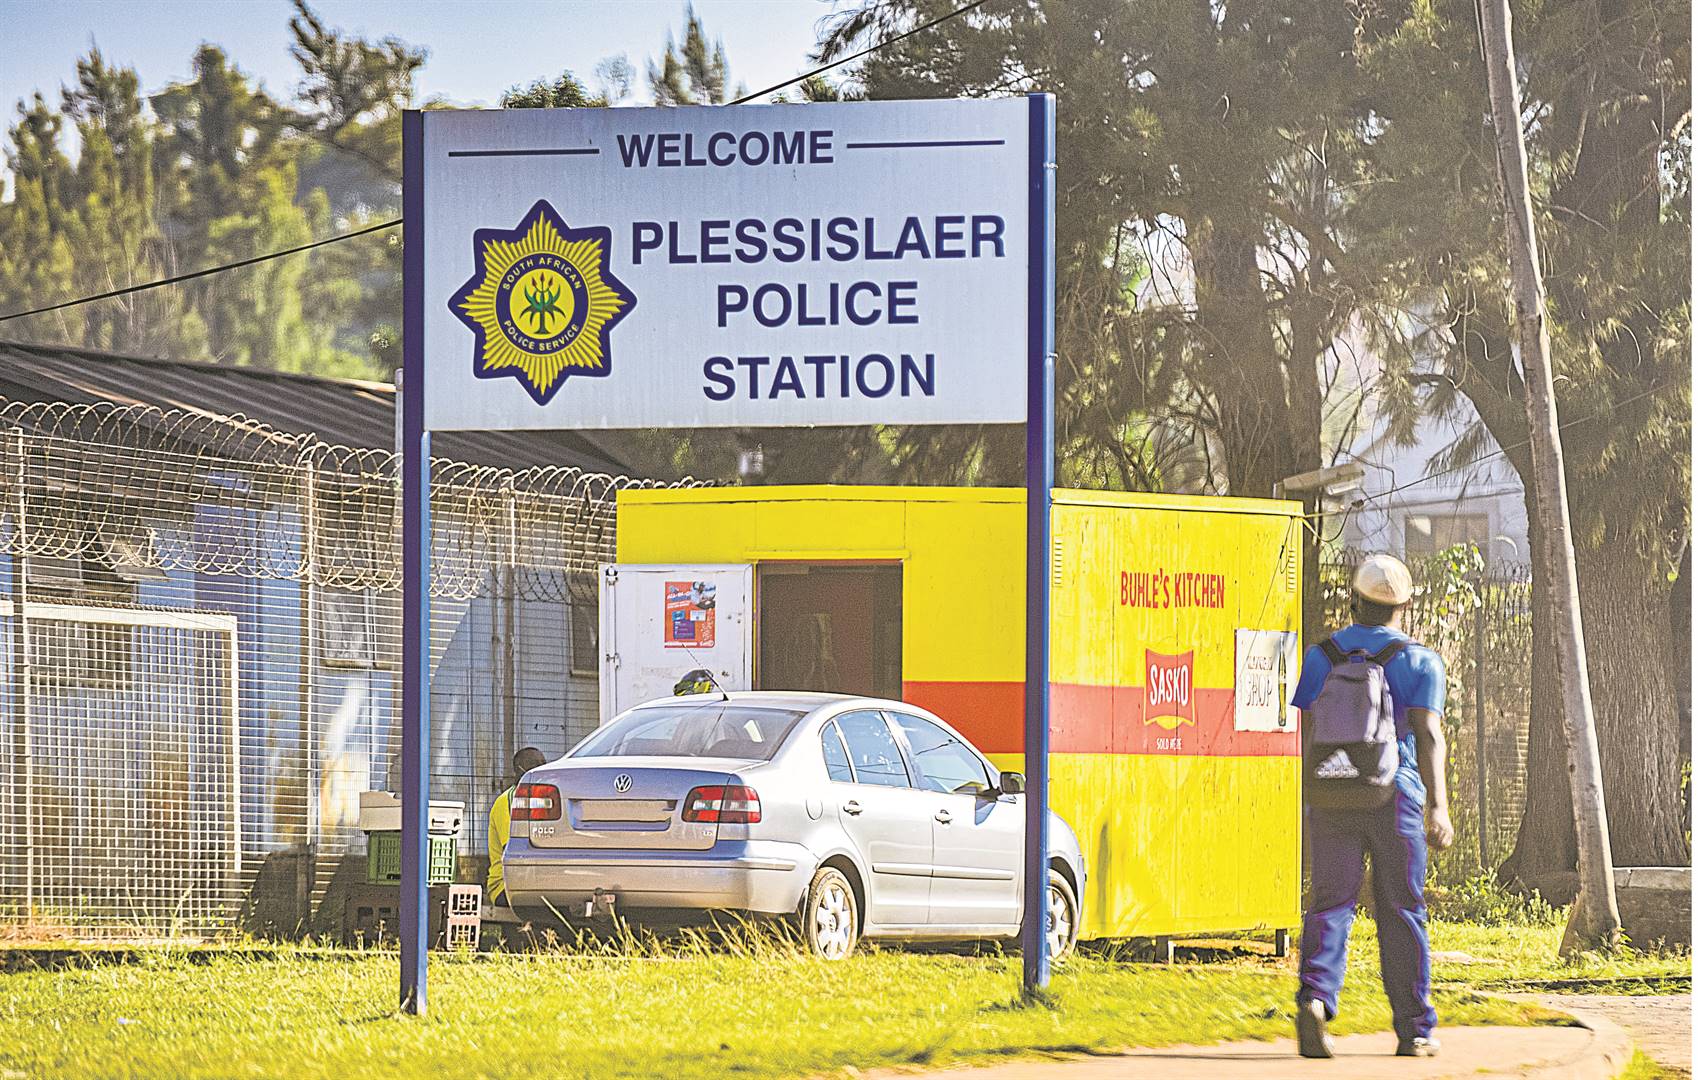 Plessislaer Police Station precinct has seen a sharp increase in murders